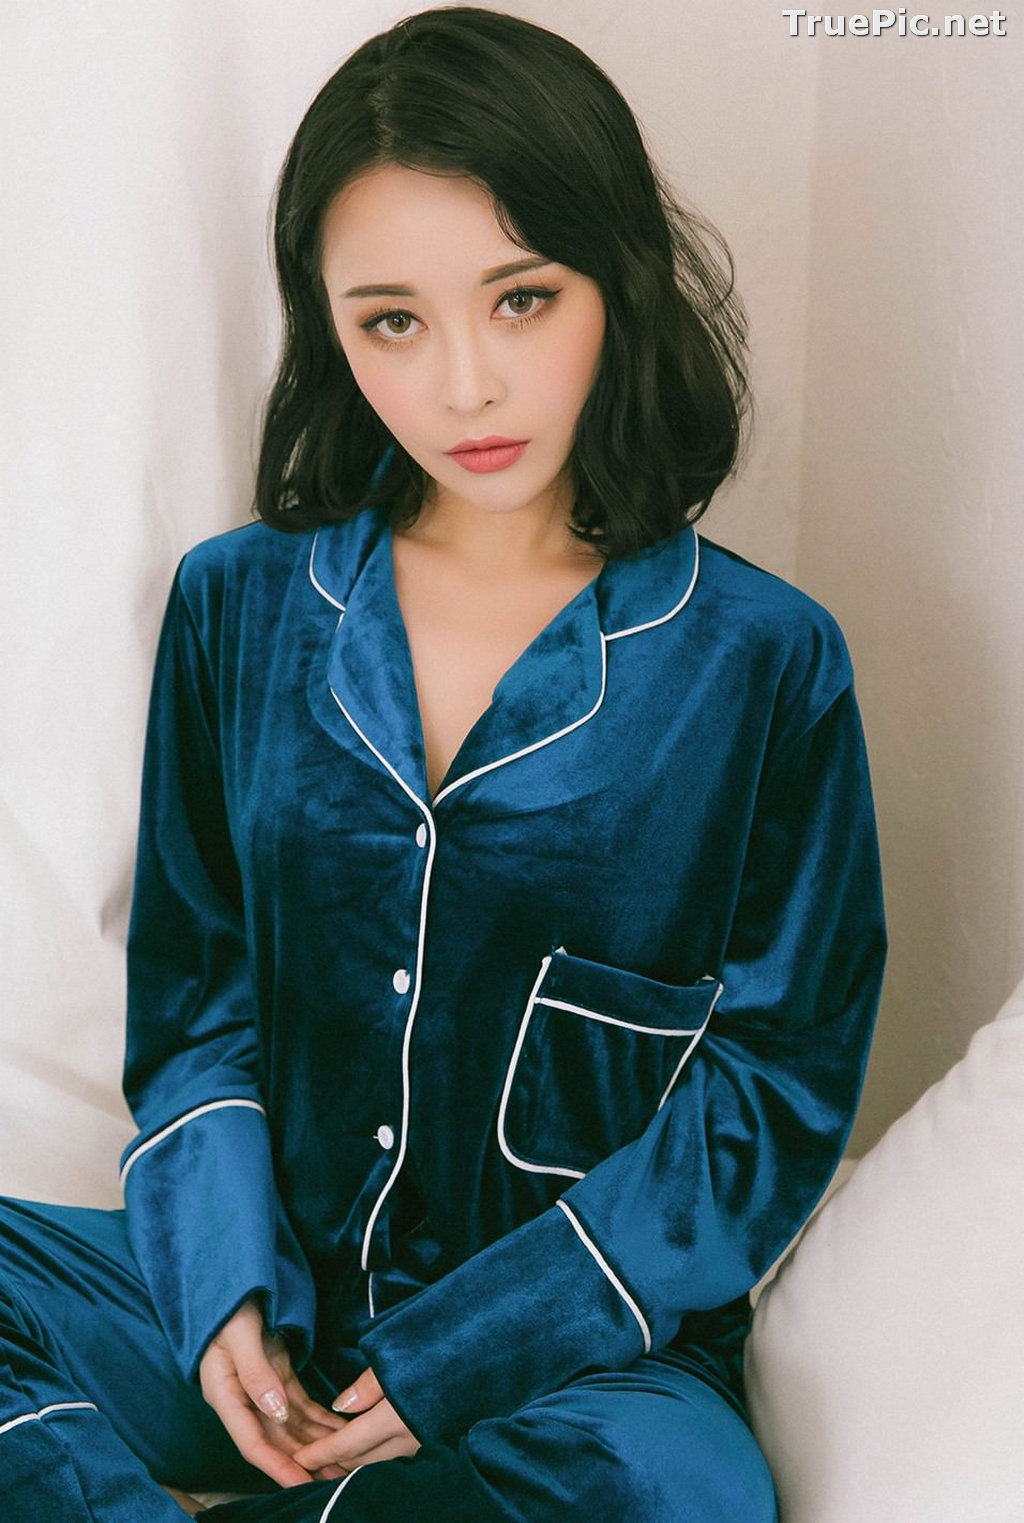 Image Ryu Hyeonju - Korean Fashion Model - Pijama and Lingerie Set - TruePic.net - Picture-37